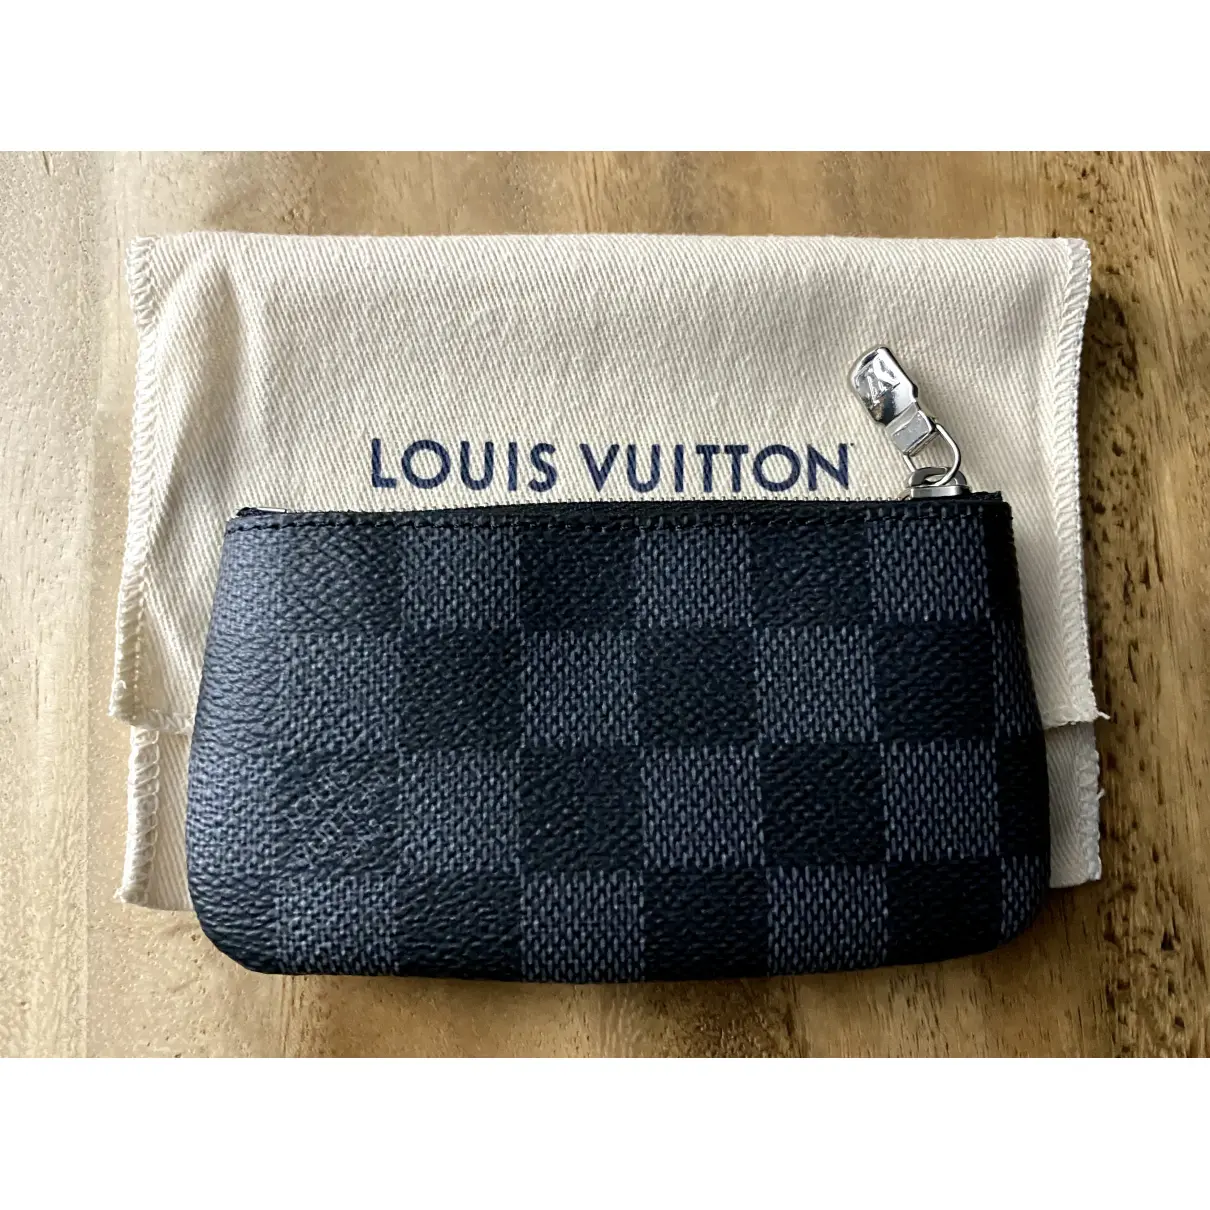 Cloth key ring Louis Vuitton